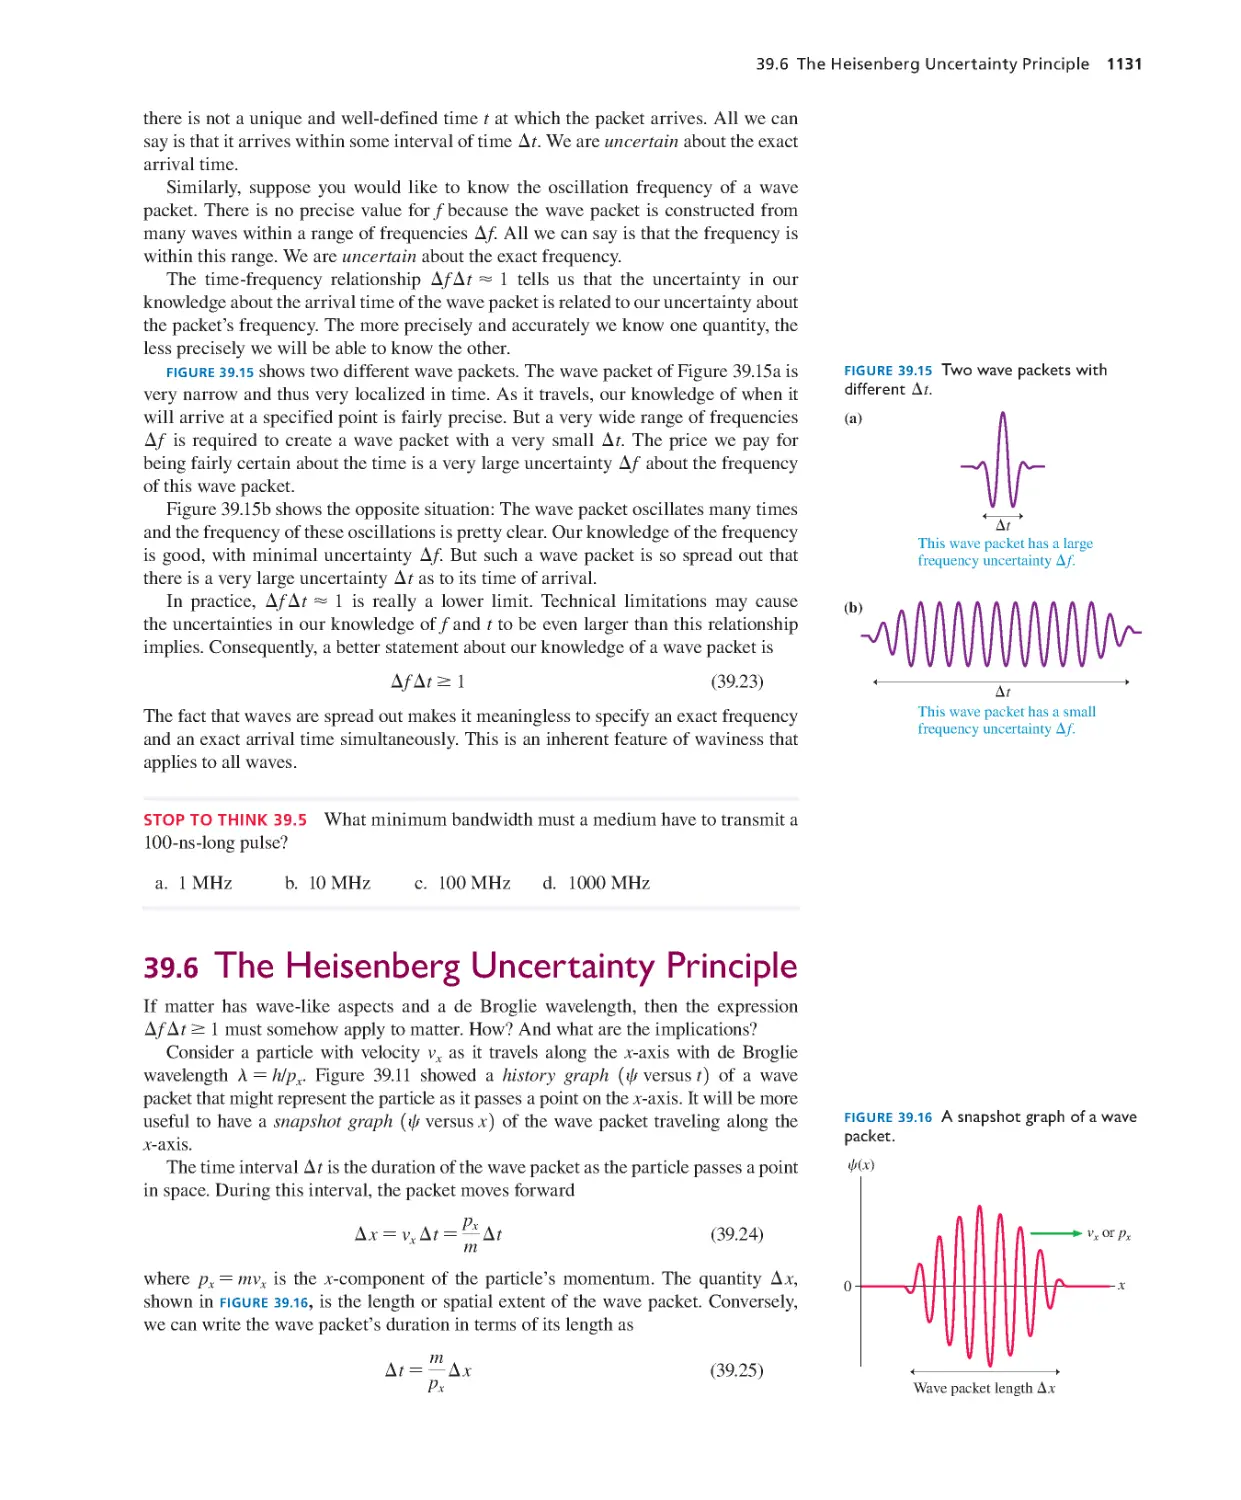 39.6. The Heisenberg Uncertainty Principle